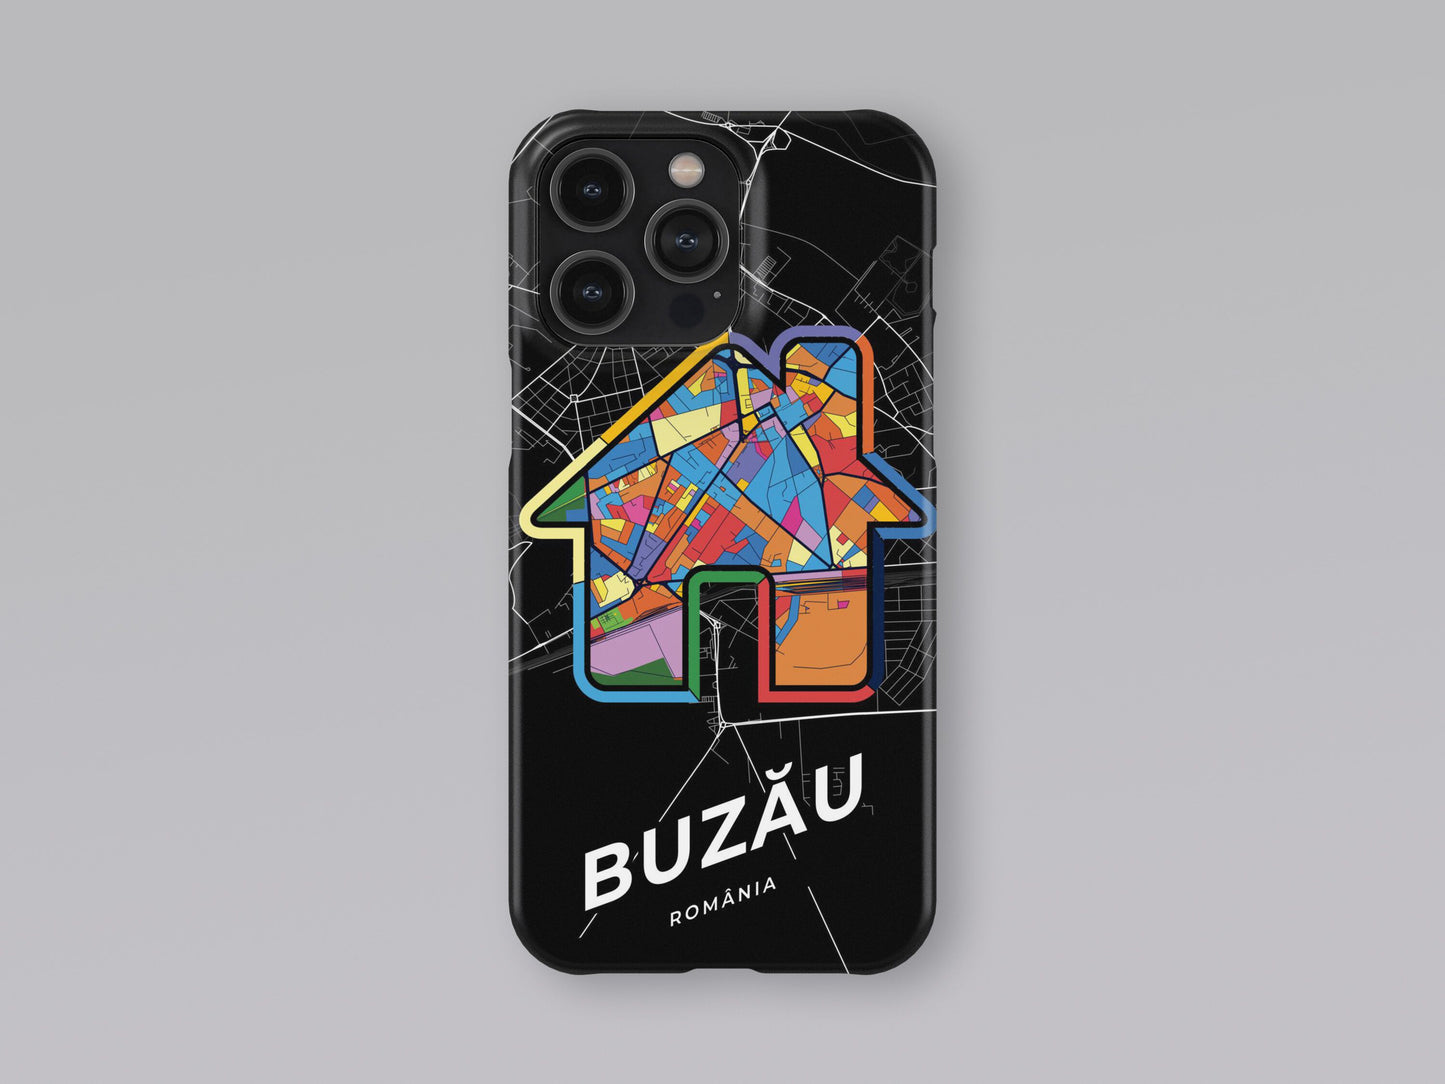 Buzău Romania slim phone case with colorful icon. Birthday, wedding or housewarming gift. Couple match cases. 3